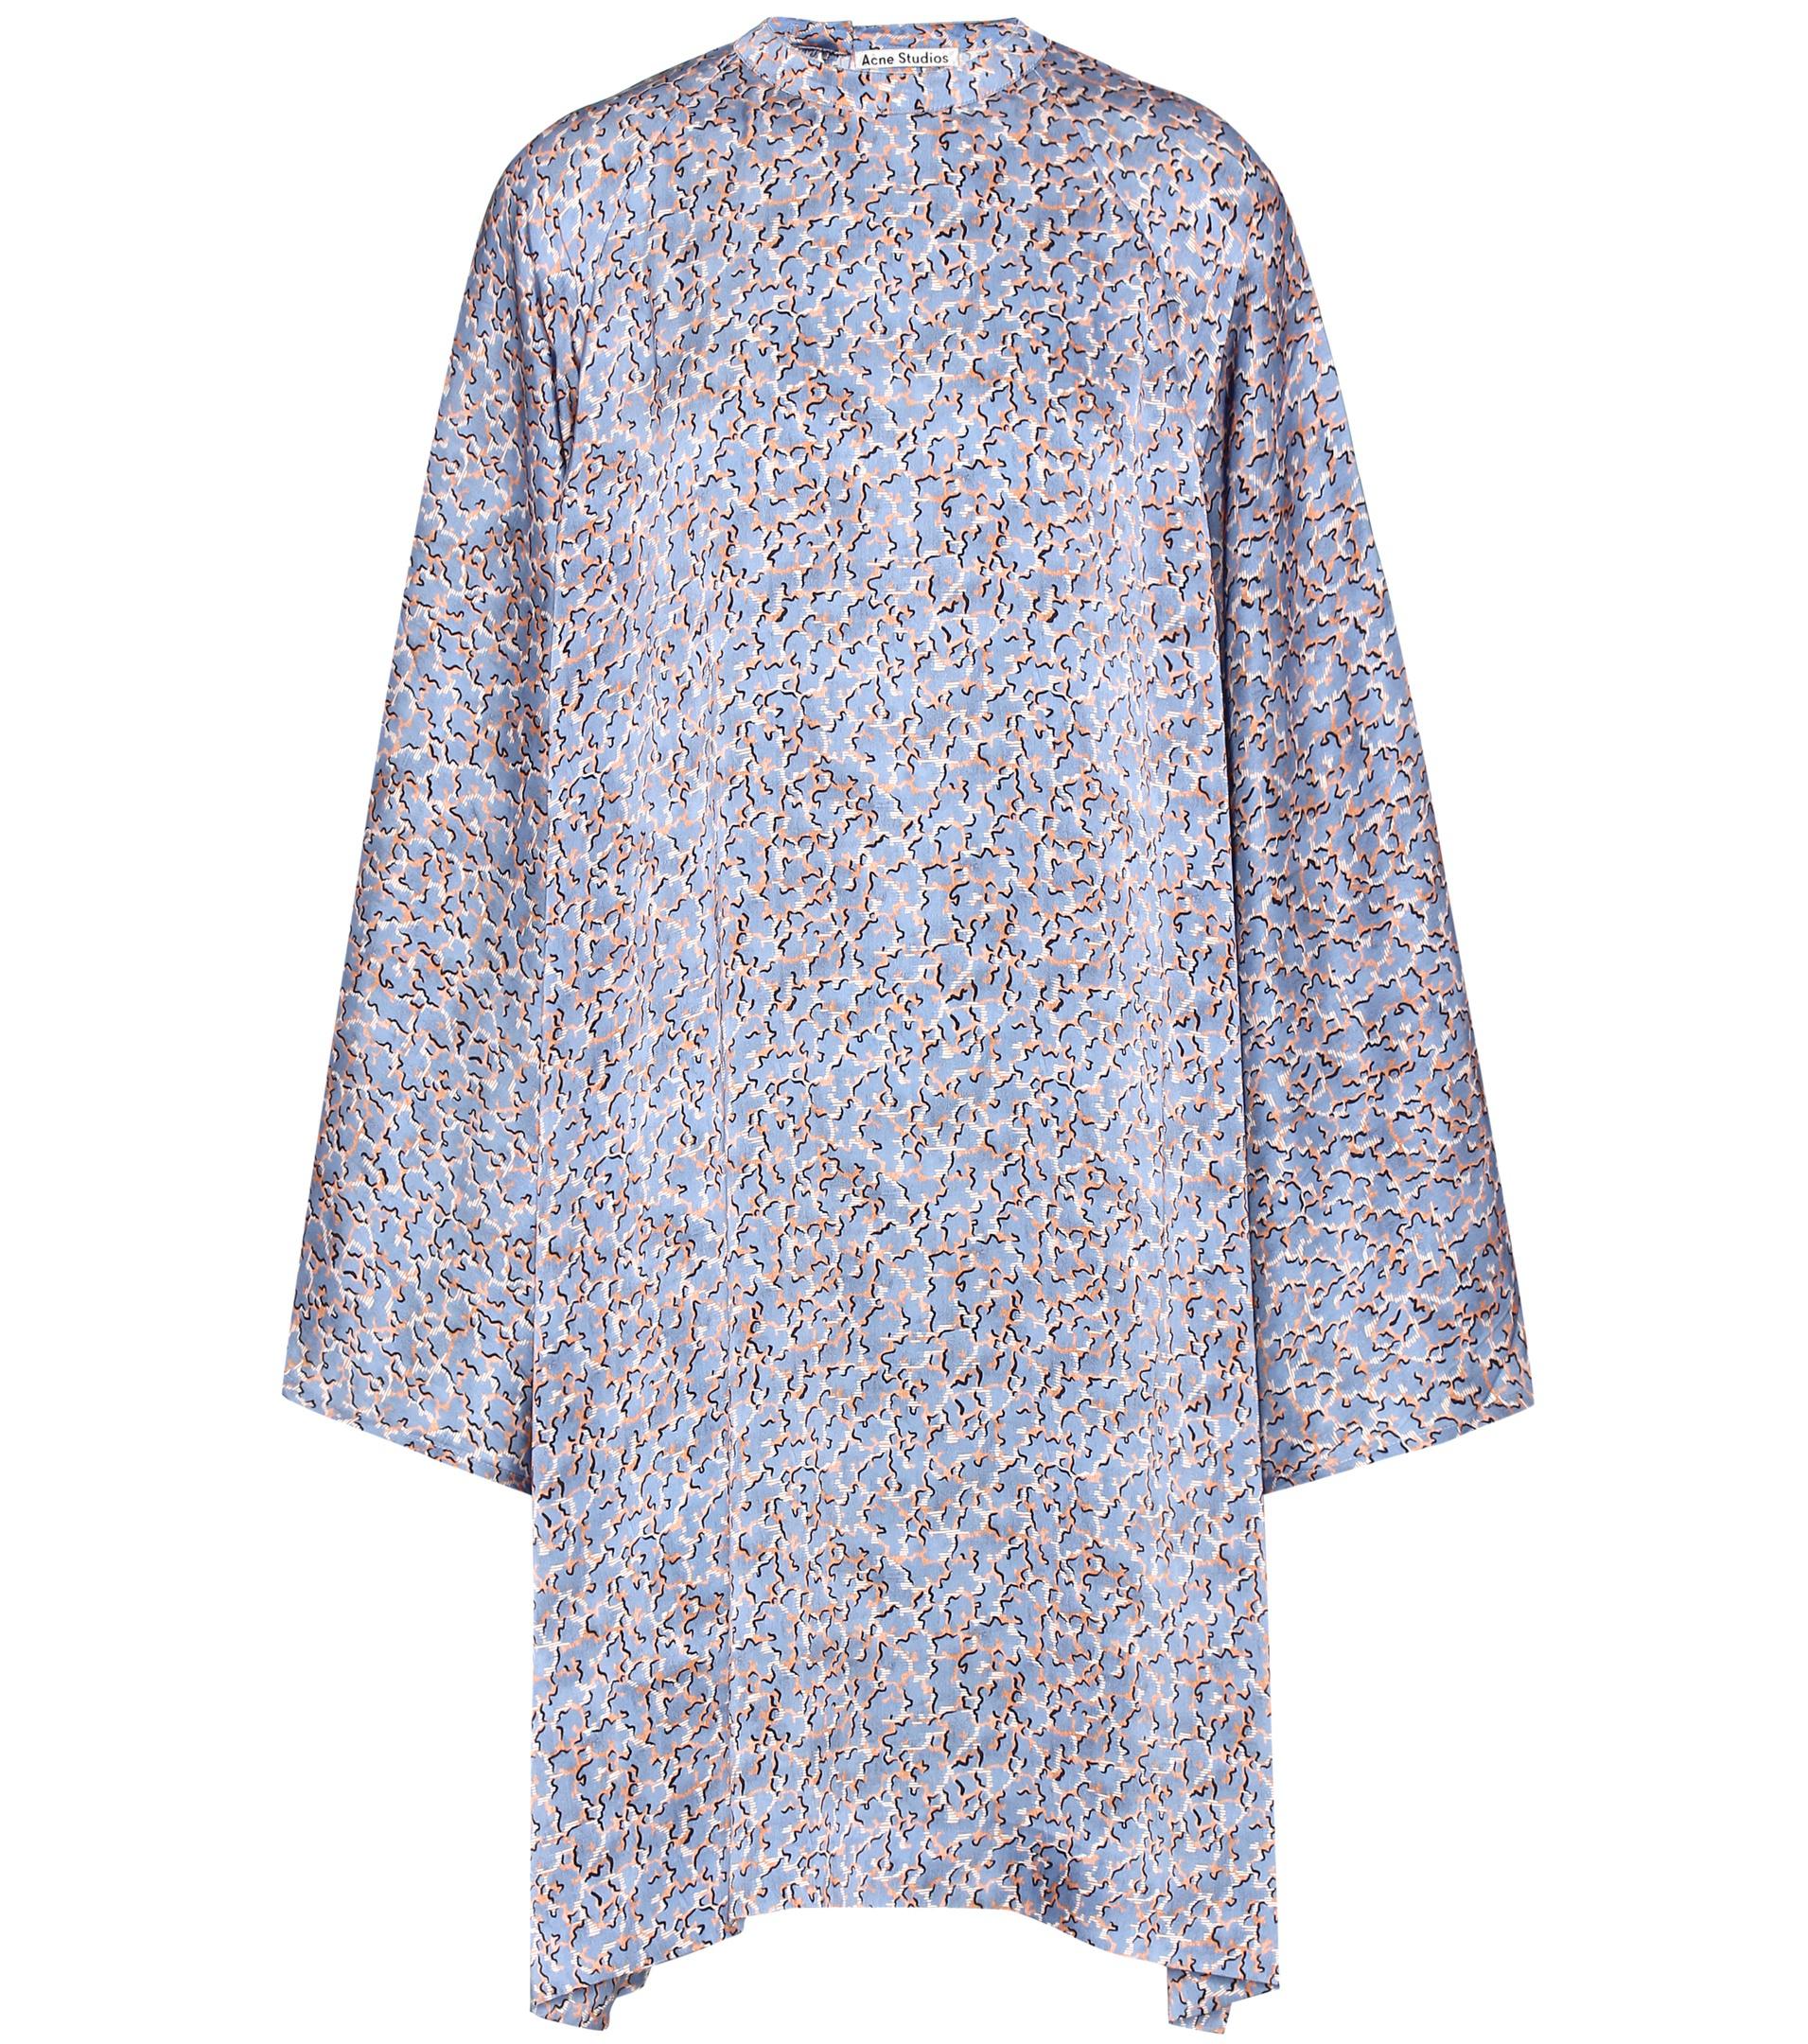 Acne Studios Danis Printed Satin Dress in Blue - Lyst